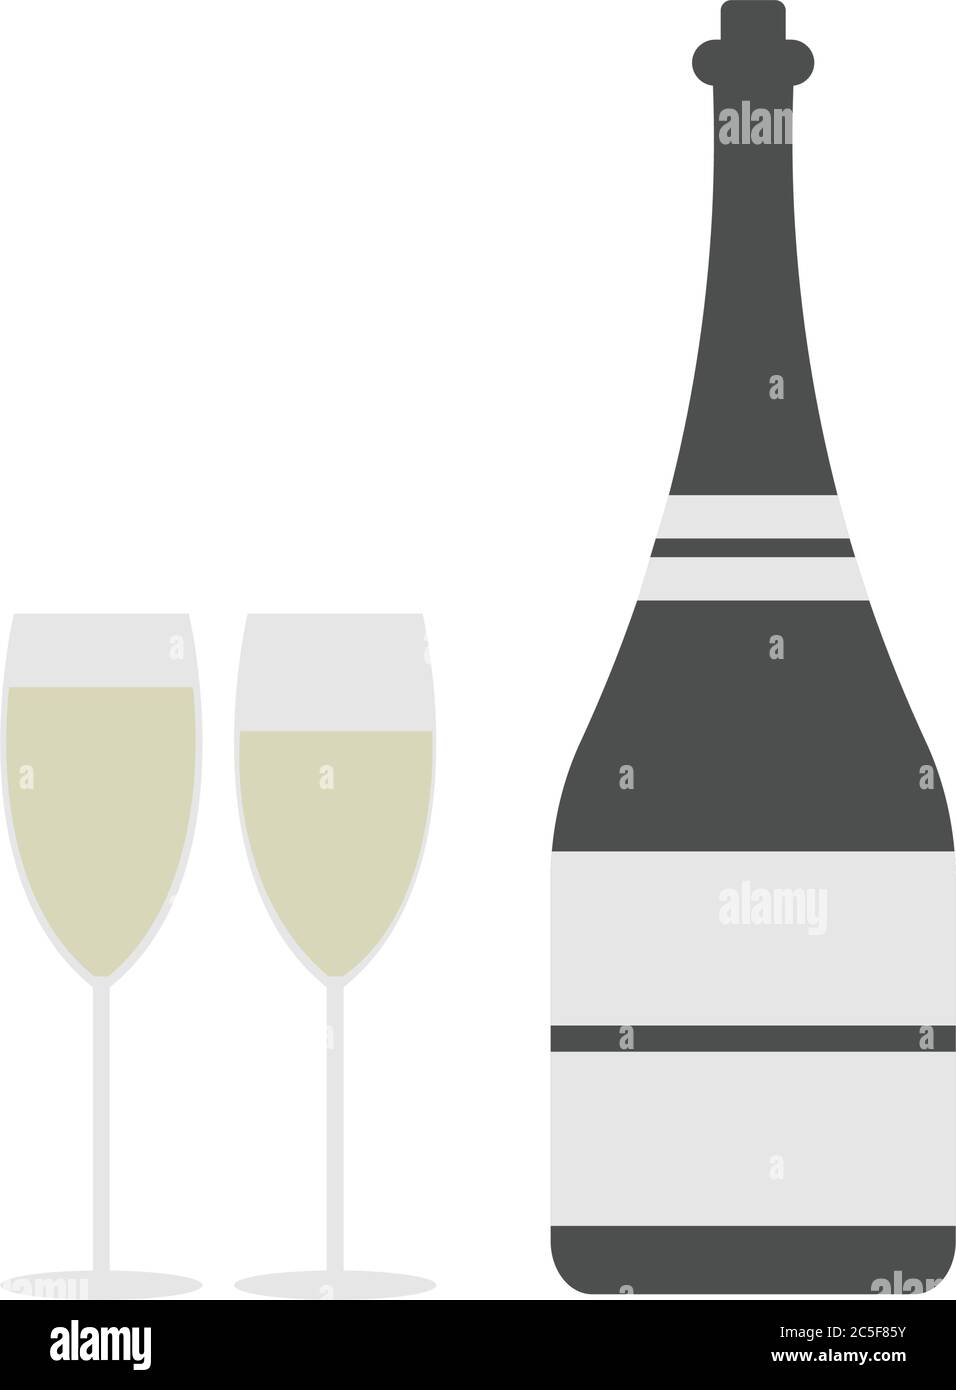 Alkoholflasche Mit Zwei Champagner-Gläser Illustration Celebration Toast Symbol Vektor Stock Vektor